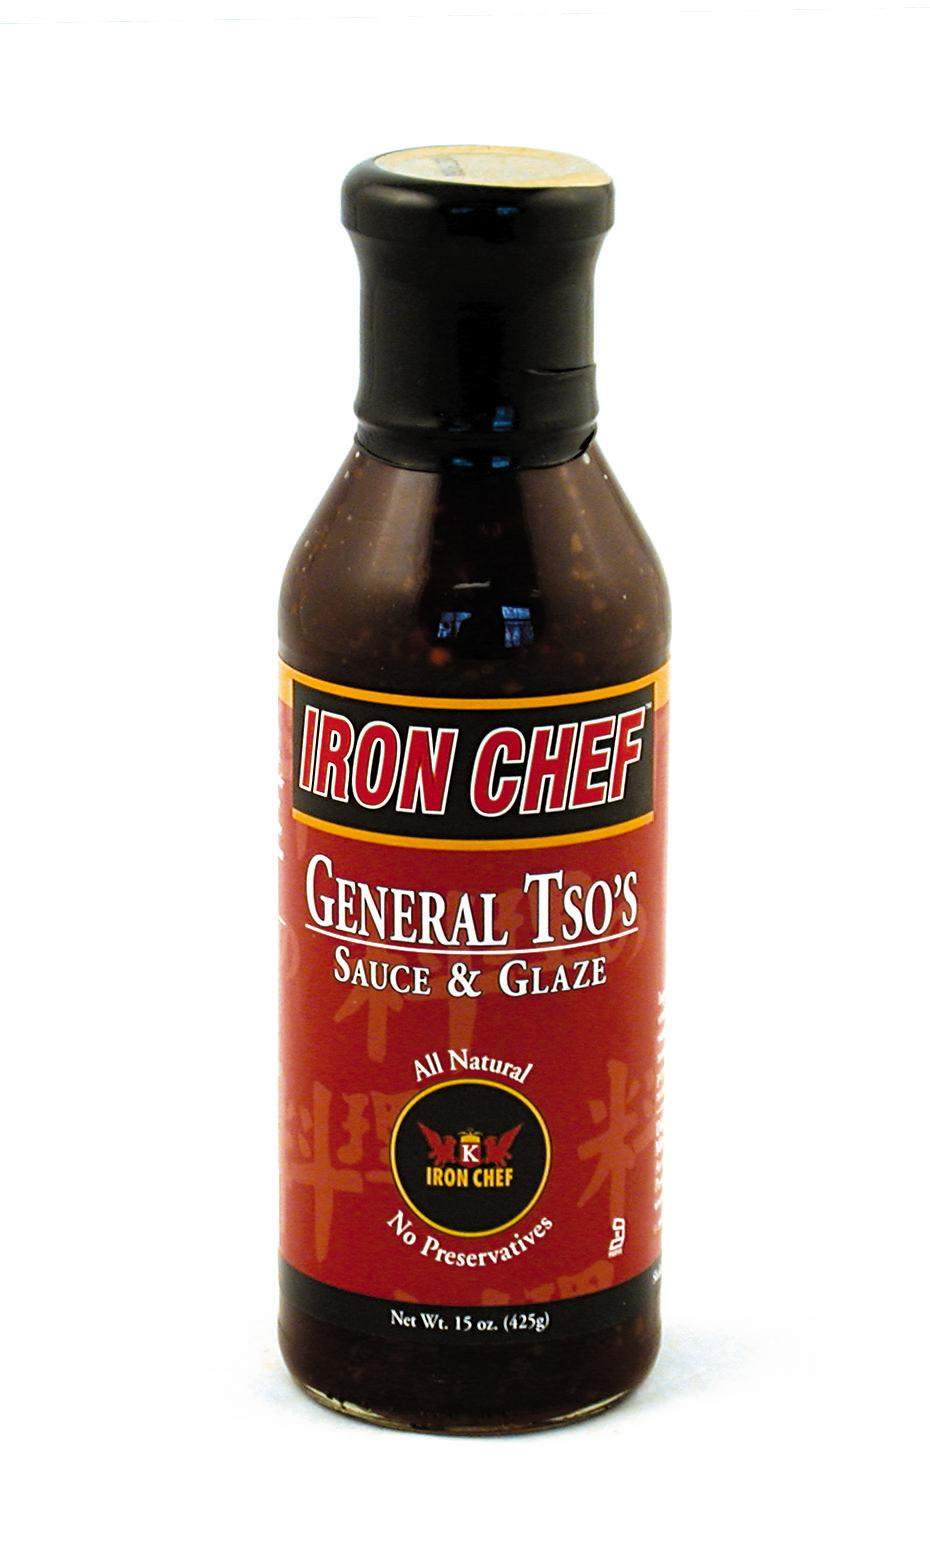 IRON CHEF: Sauce & Glaze General Tso's, 15 oz